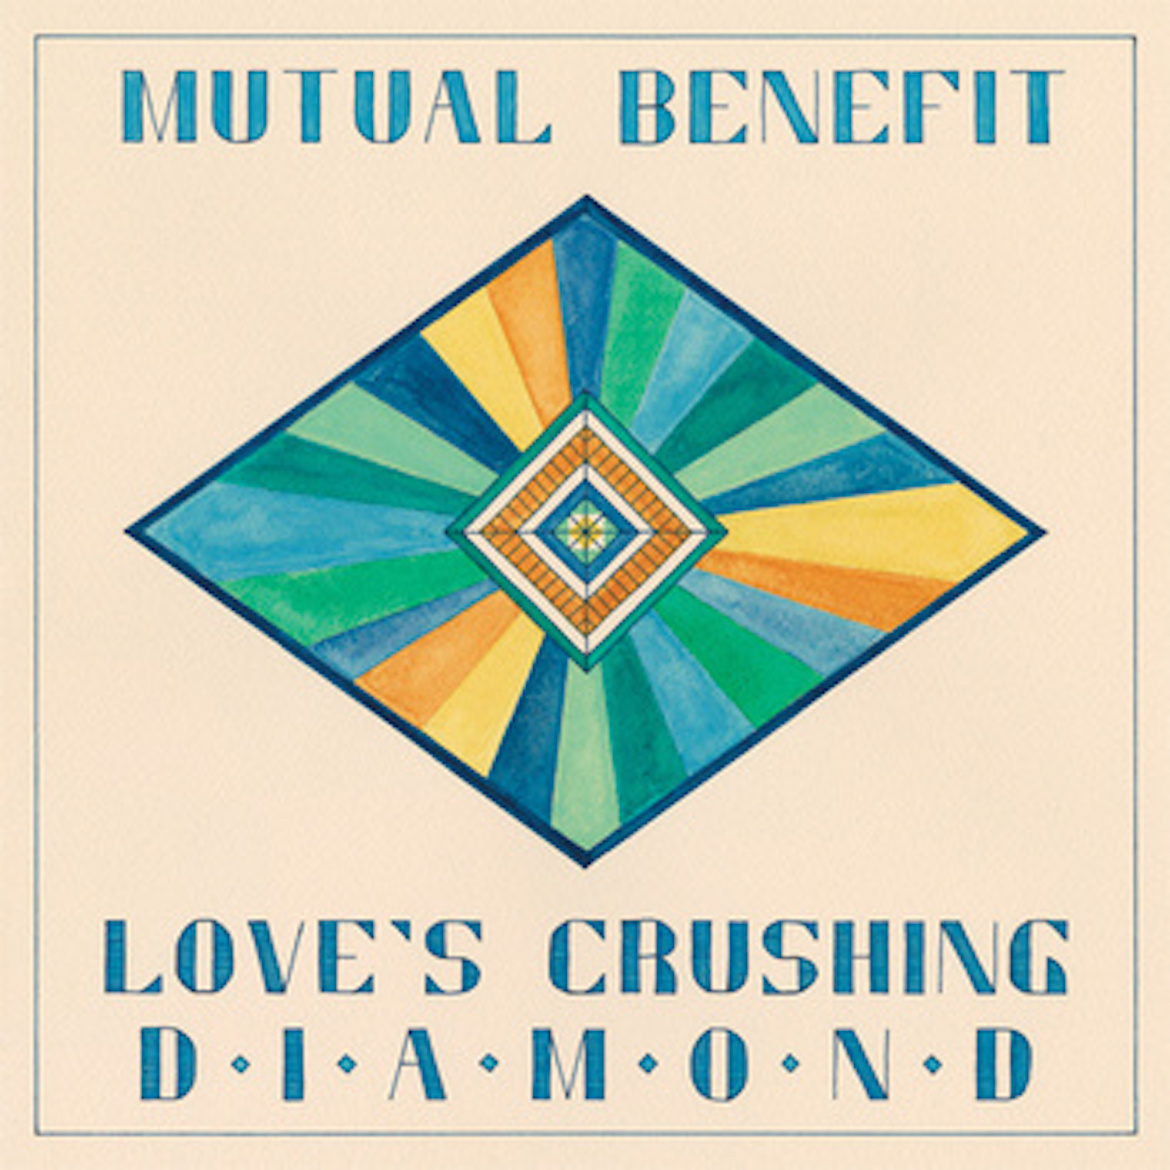 Love's Crushing Diamond album cover from Mutual Benefit